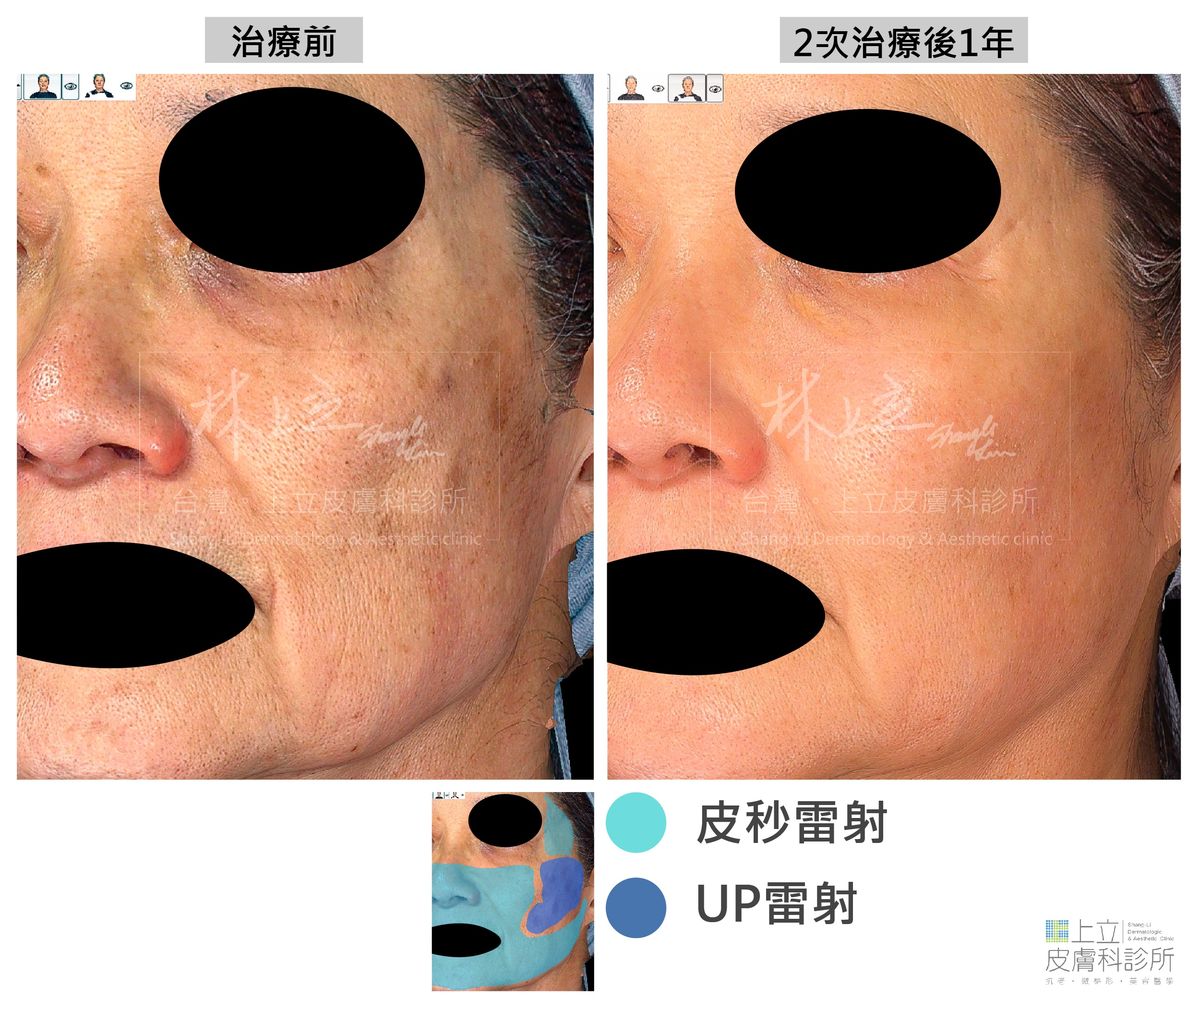 PicoSure皮秒雷射和UP雷射分別運用在臉部不同區塊的治療縮小毛孔